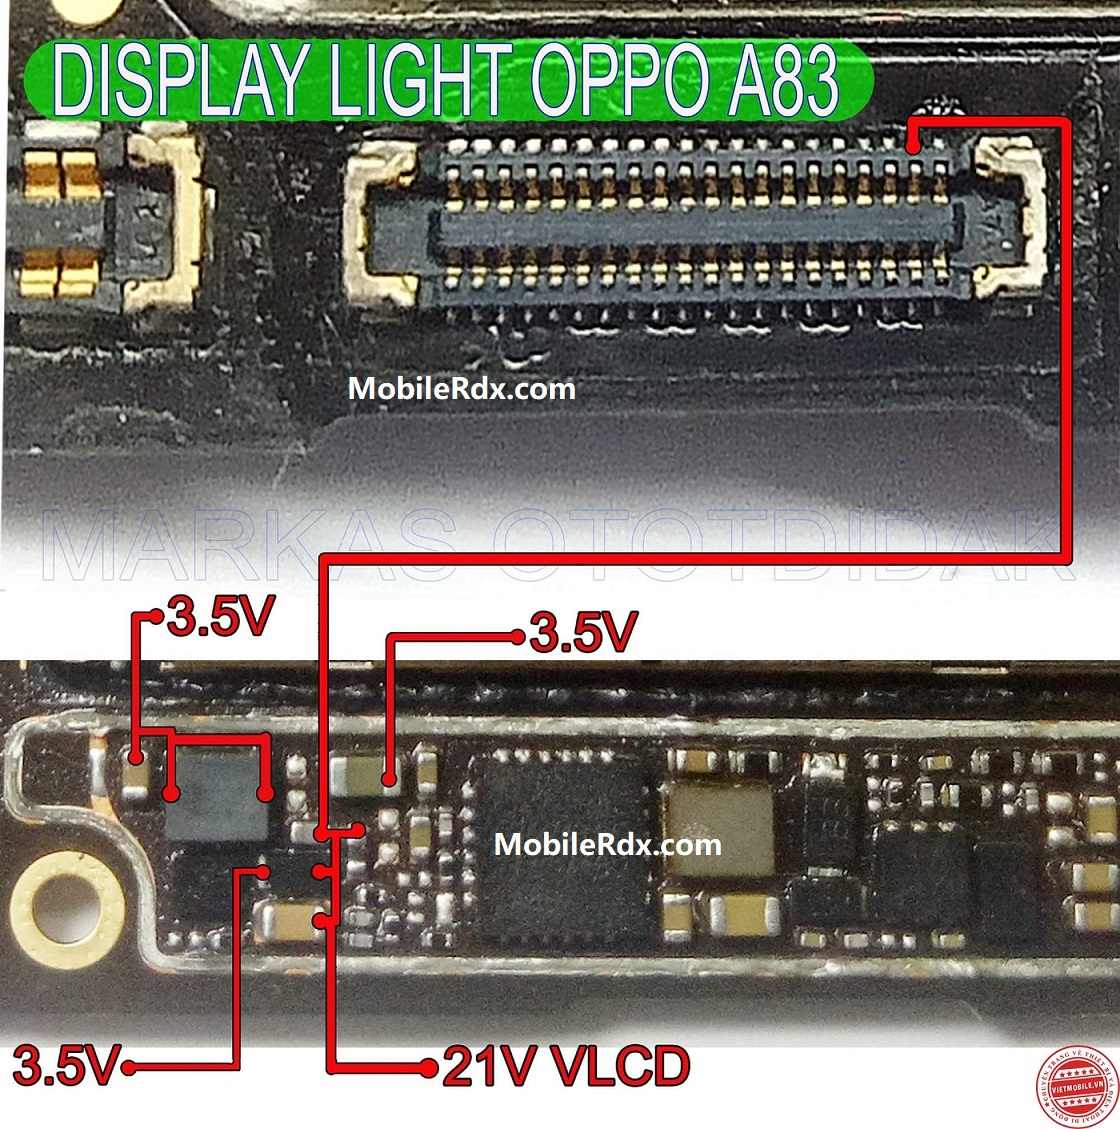 Oppo A83 Display Light Solution Backlight Ways